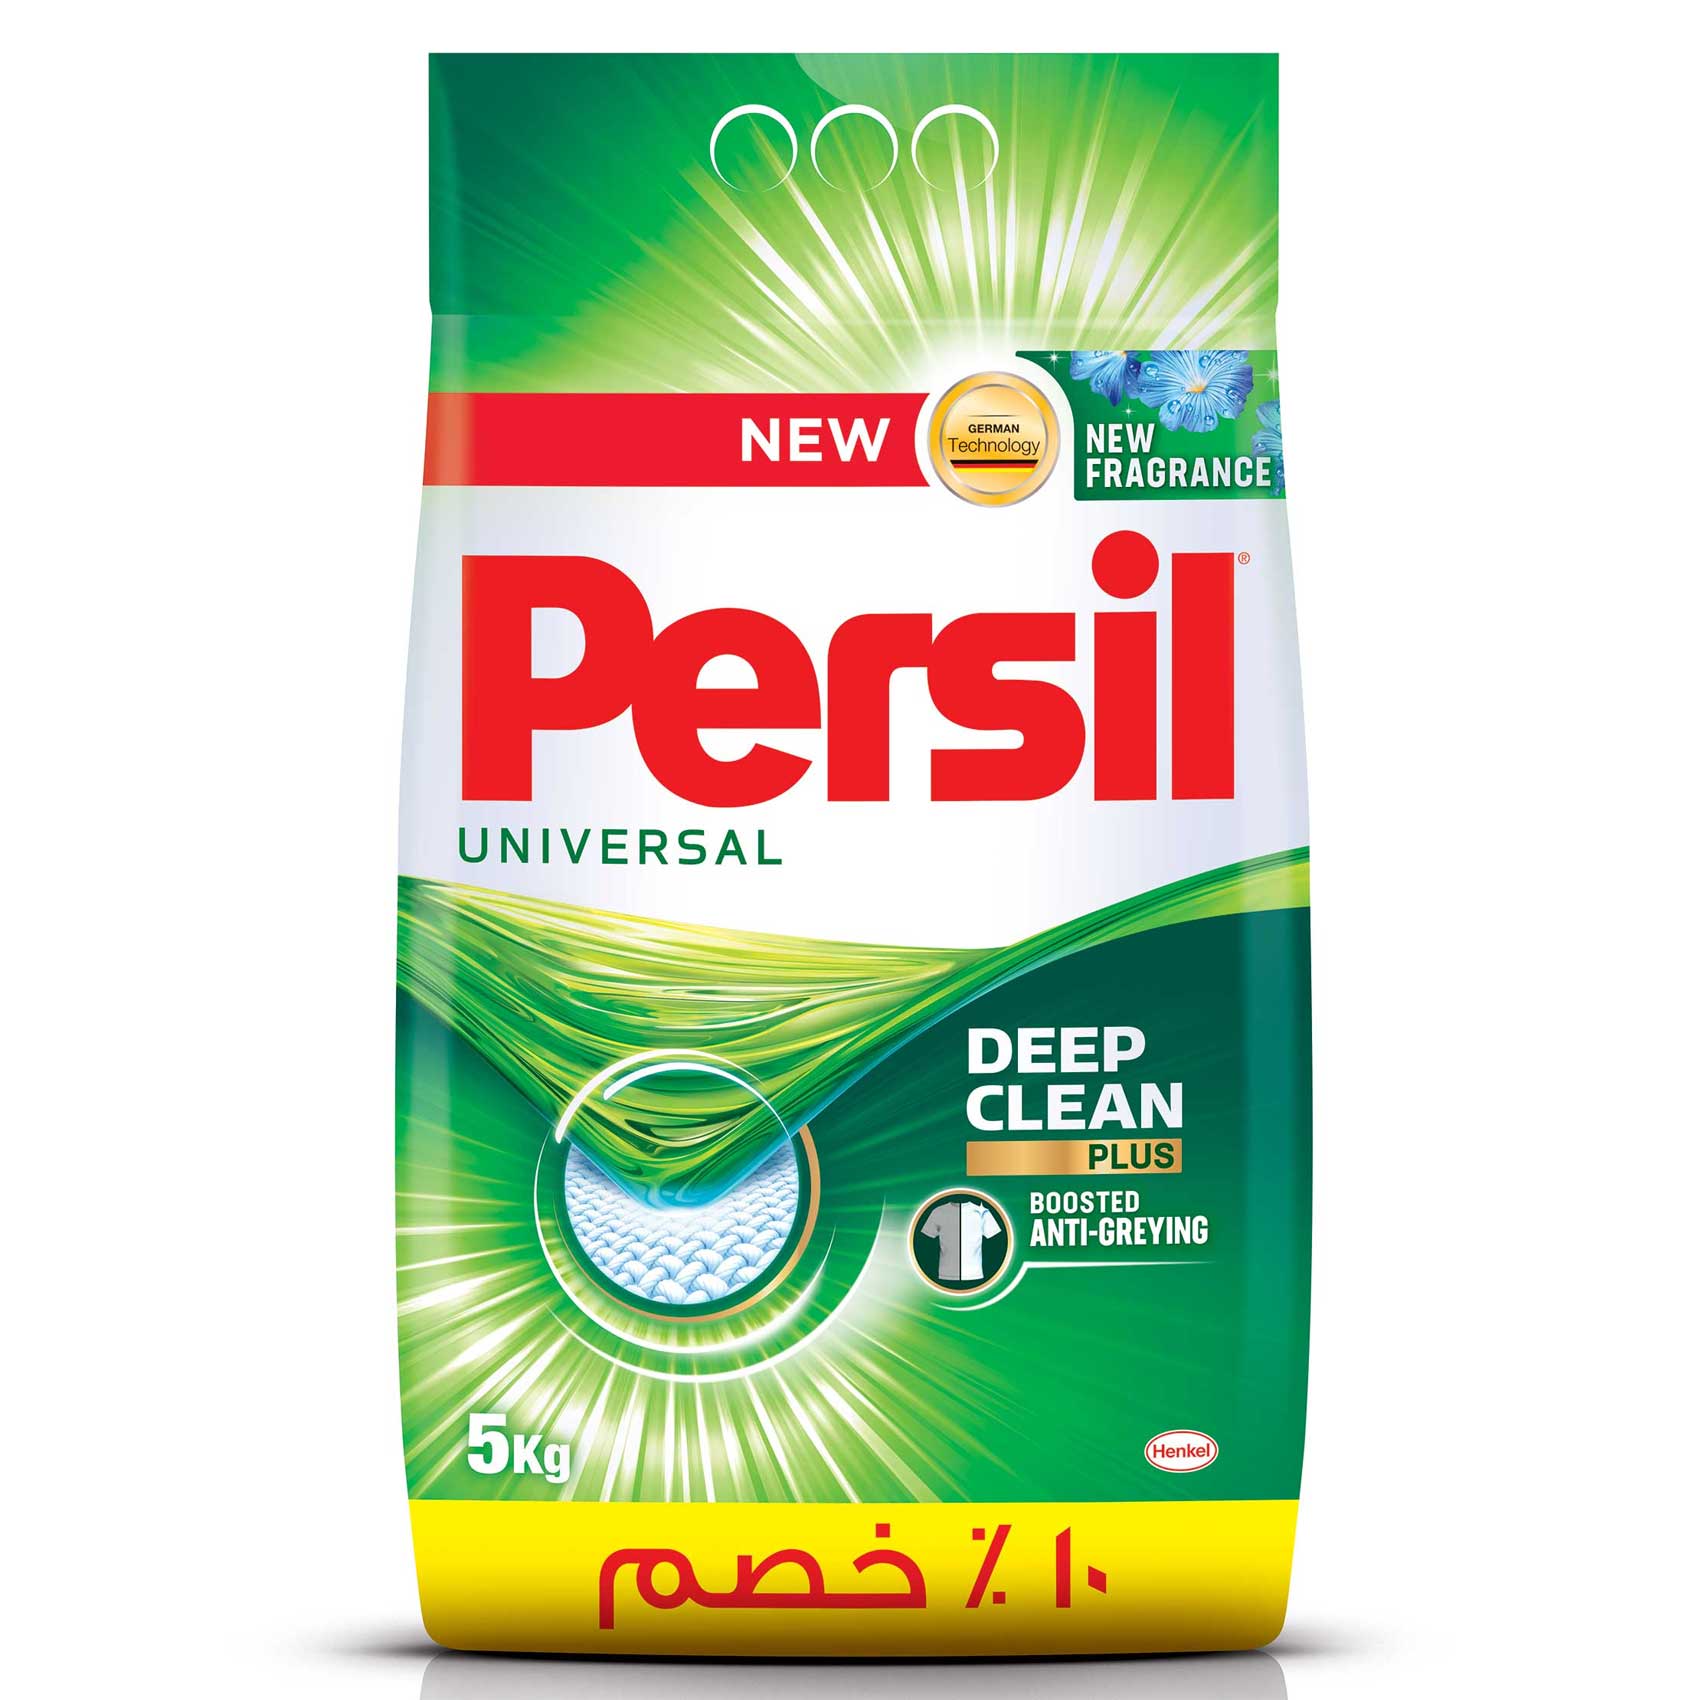 Persil Universal Powder Laundry Detergent 5 Kg Laundry Detergent Powder with Deep Clean Plus Technology 10% disc